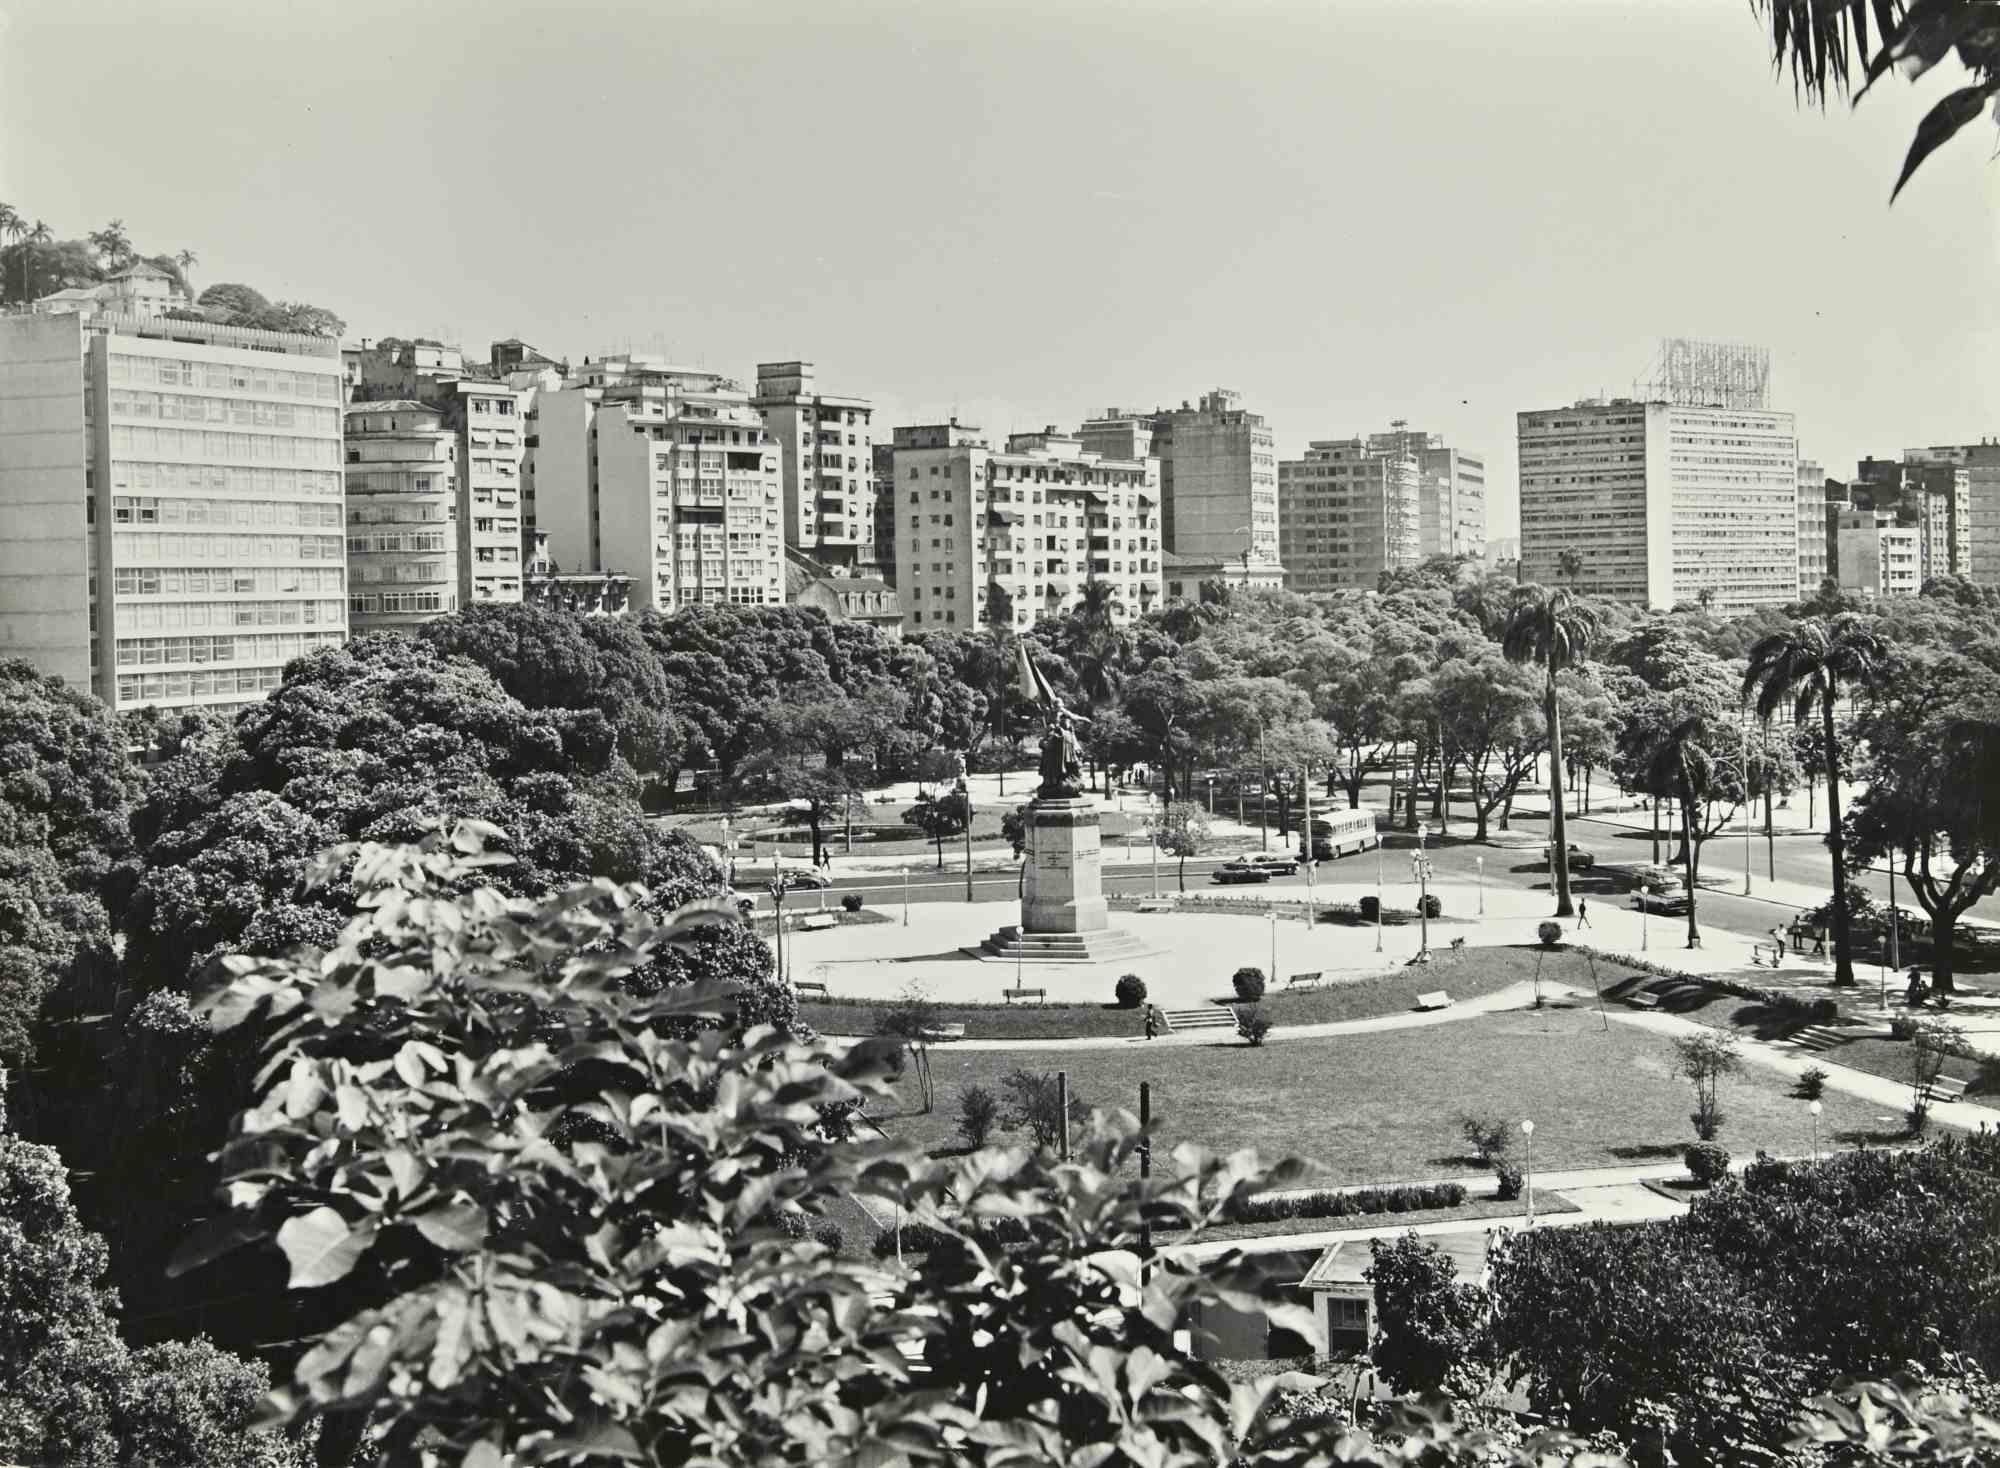 Unknown Figurative Photograph - Rio de Janeiro Garden of Glory - Vintage b/w Photo - 1970s